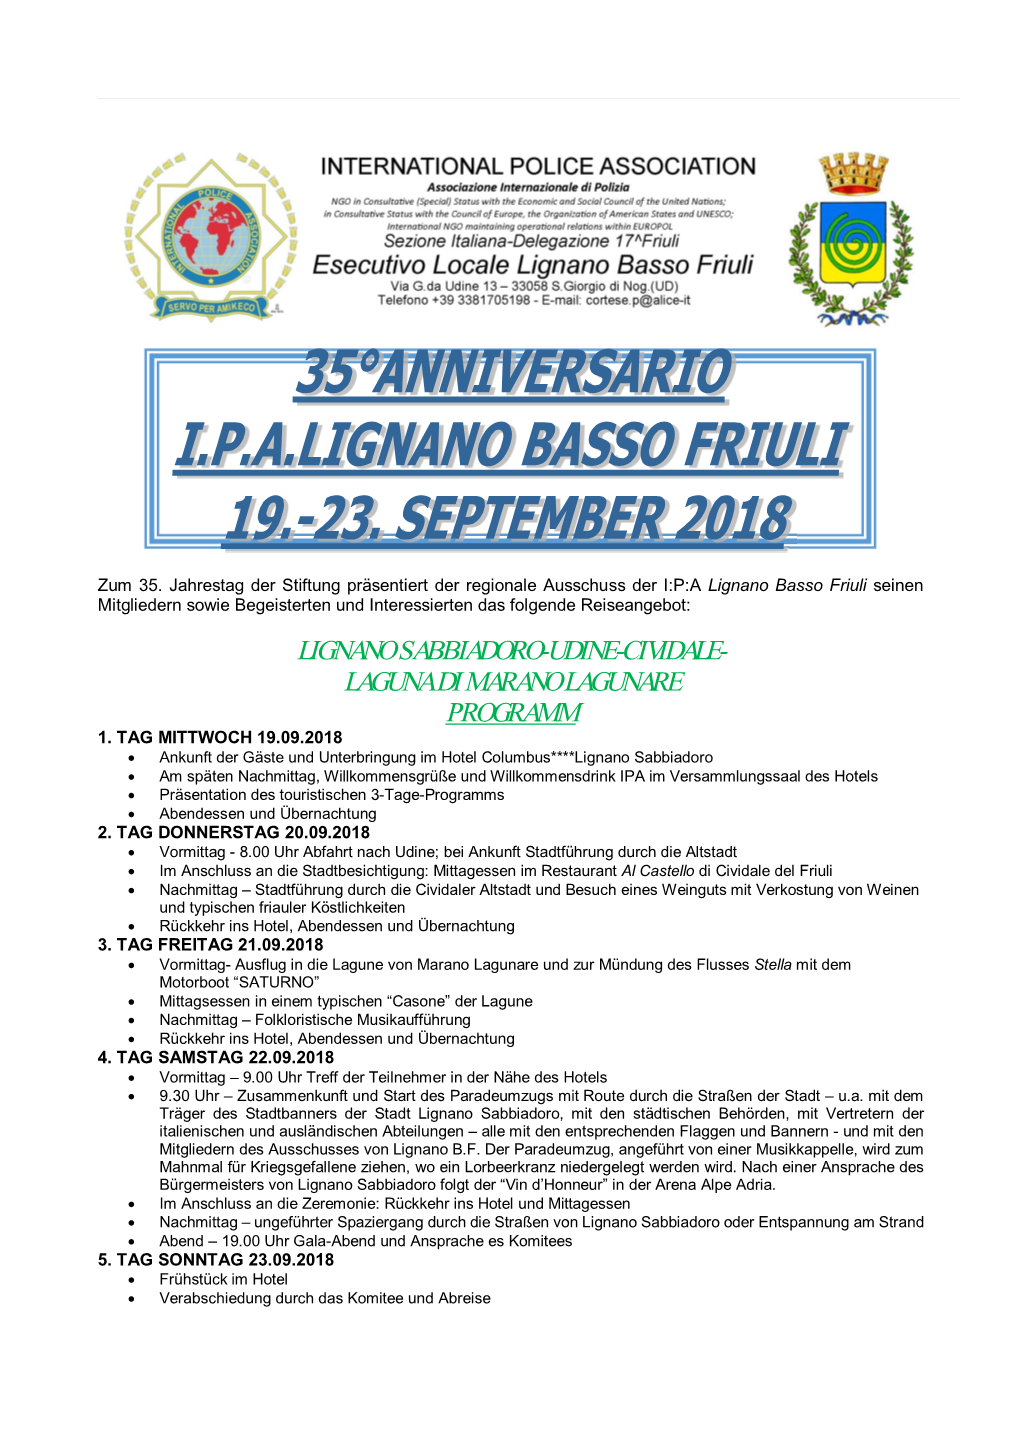 Lignano Sabbiadoro-Udine-Cividale- Laguna Di Marano Lagunare Programm 1